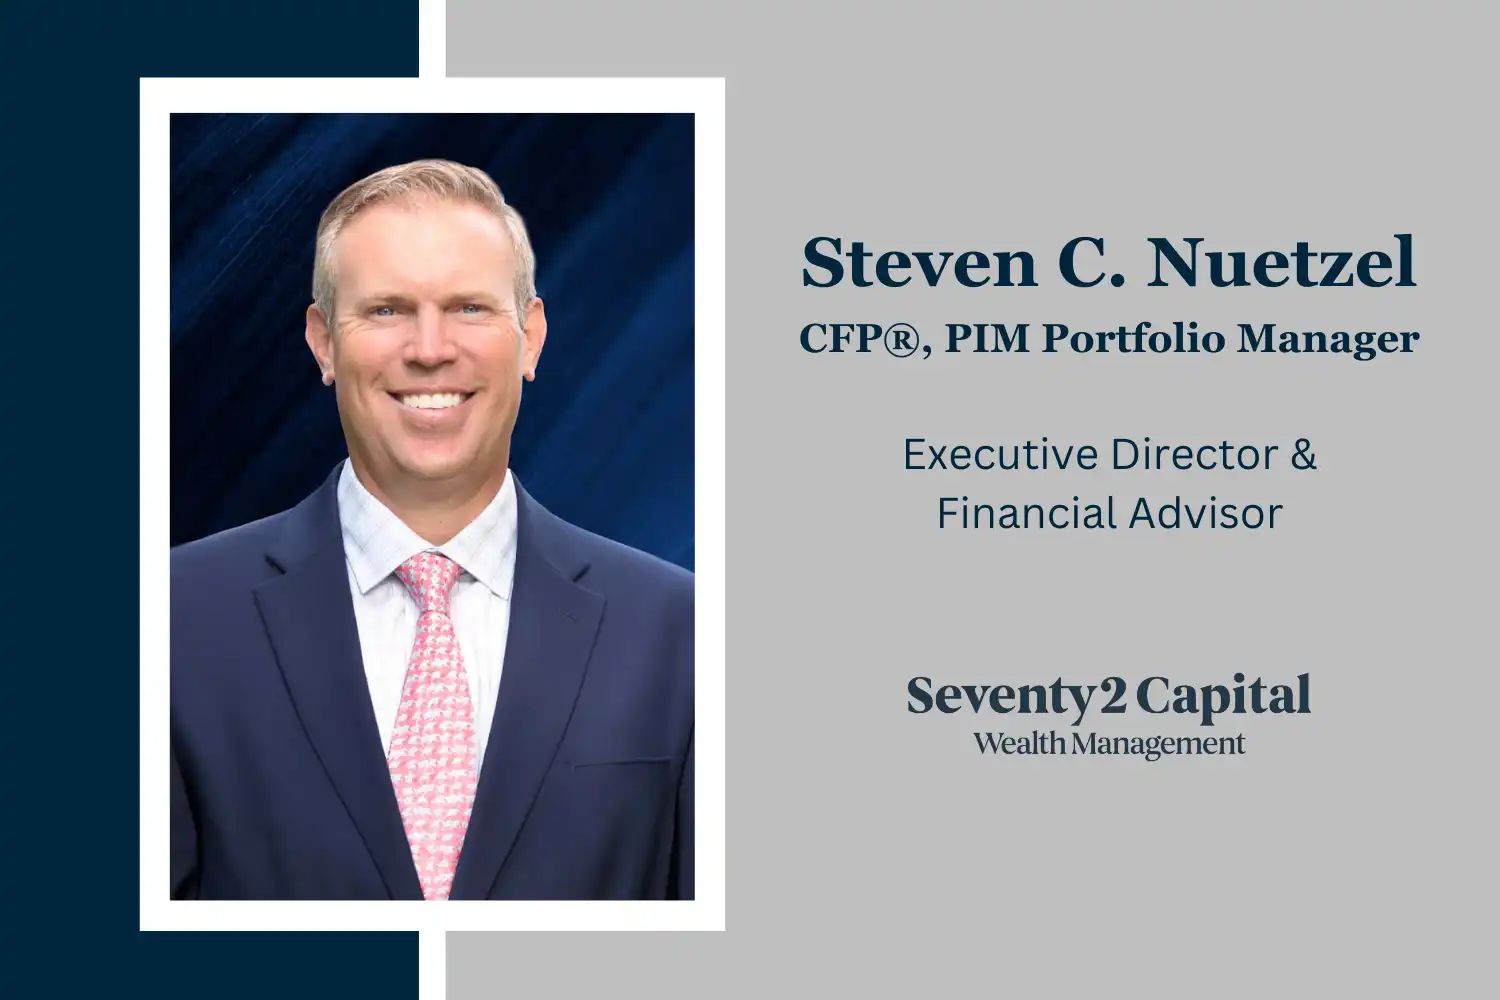 Steven Nuetzel joins Seventy2 Capital Wealth Management as Executive Director & Financial Advisor